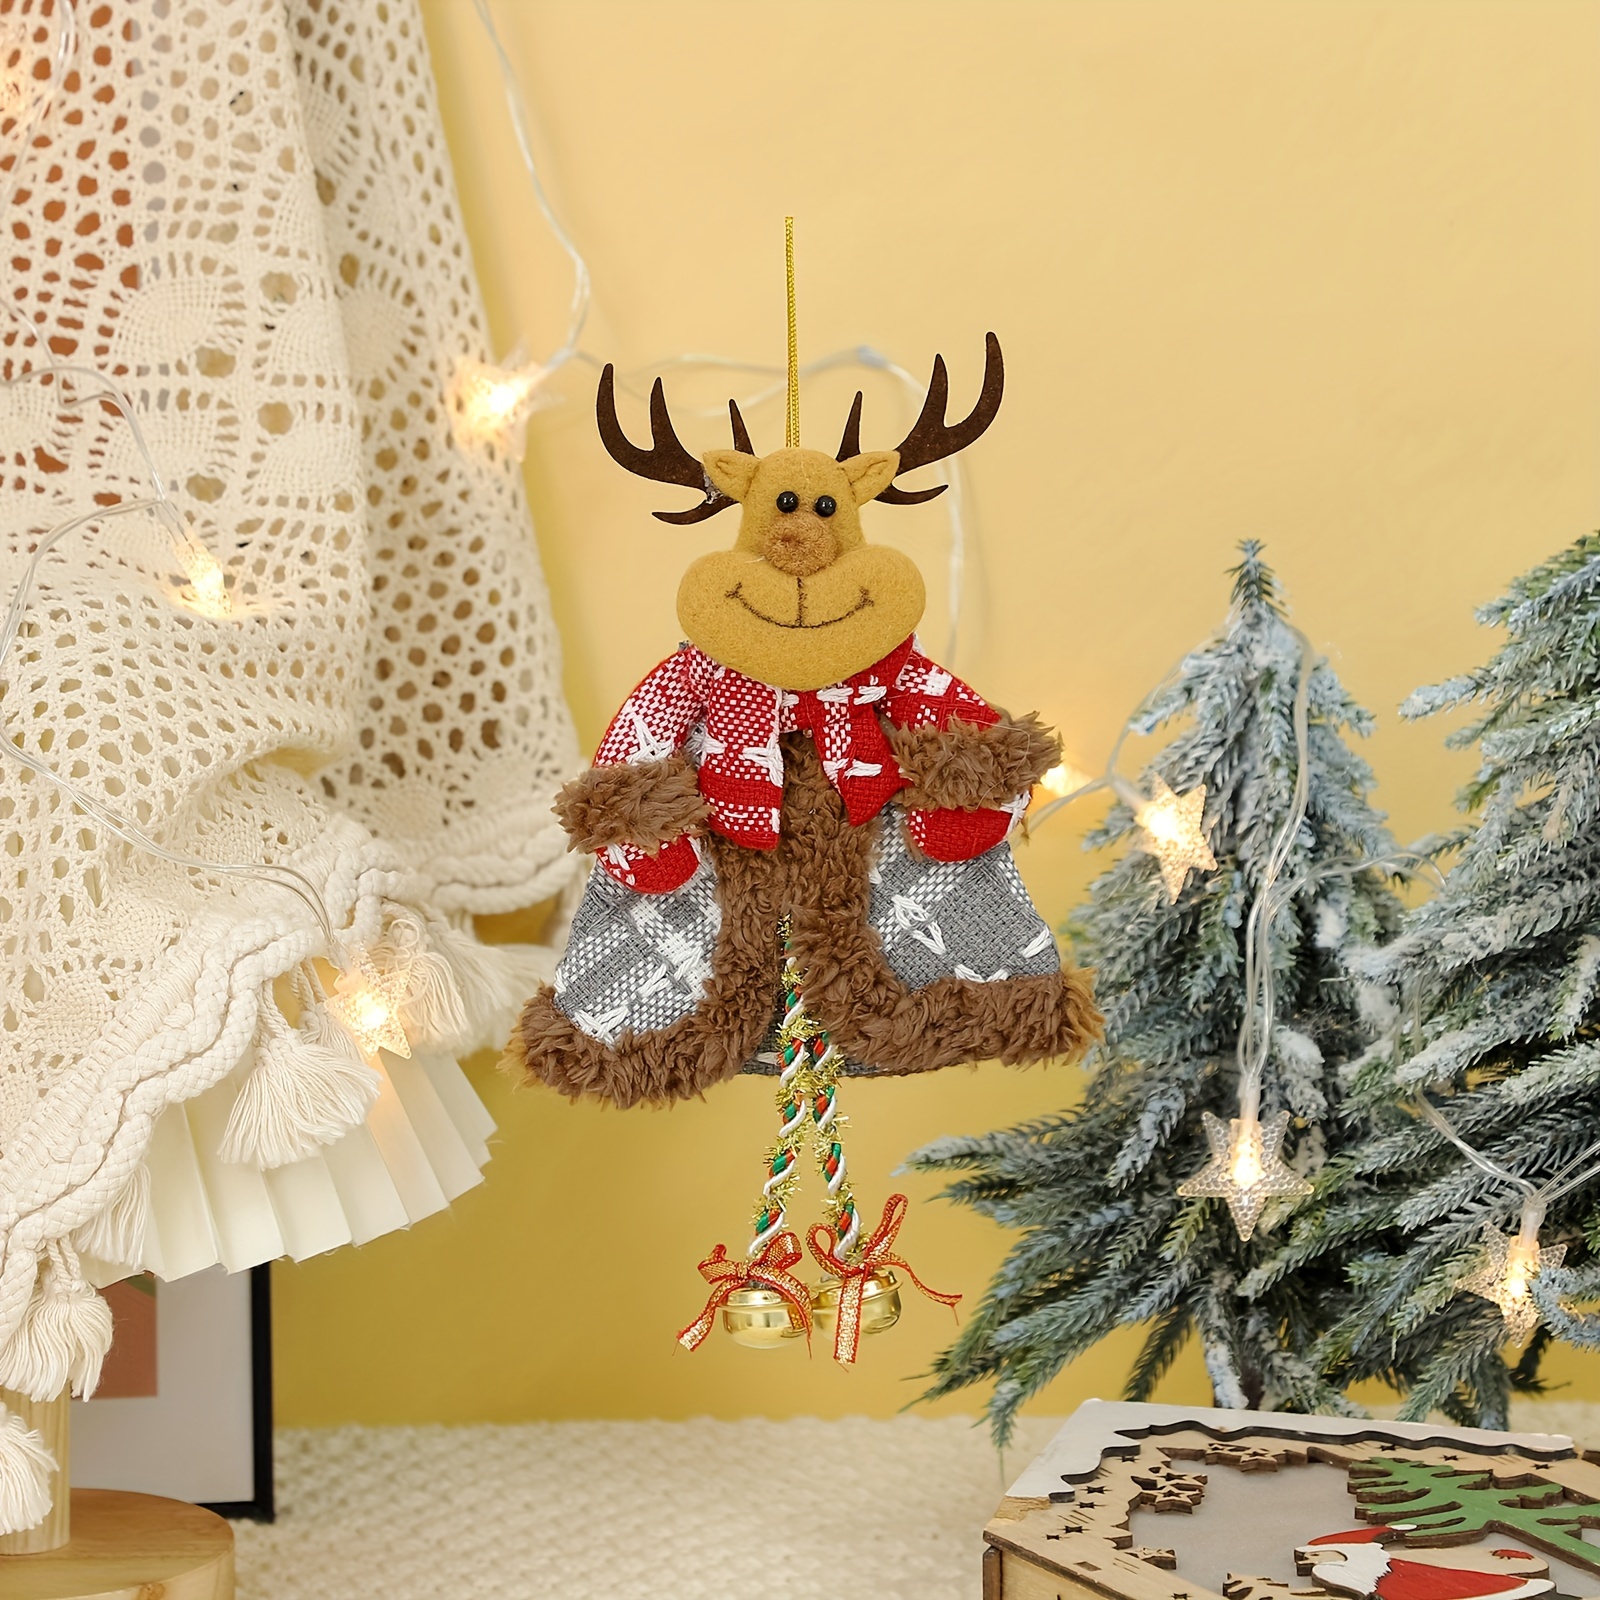 Festive Fabric Christmas Cone Decoration